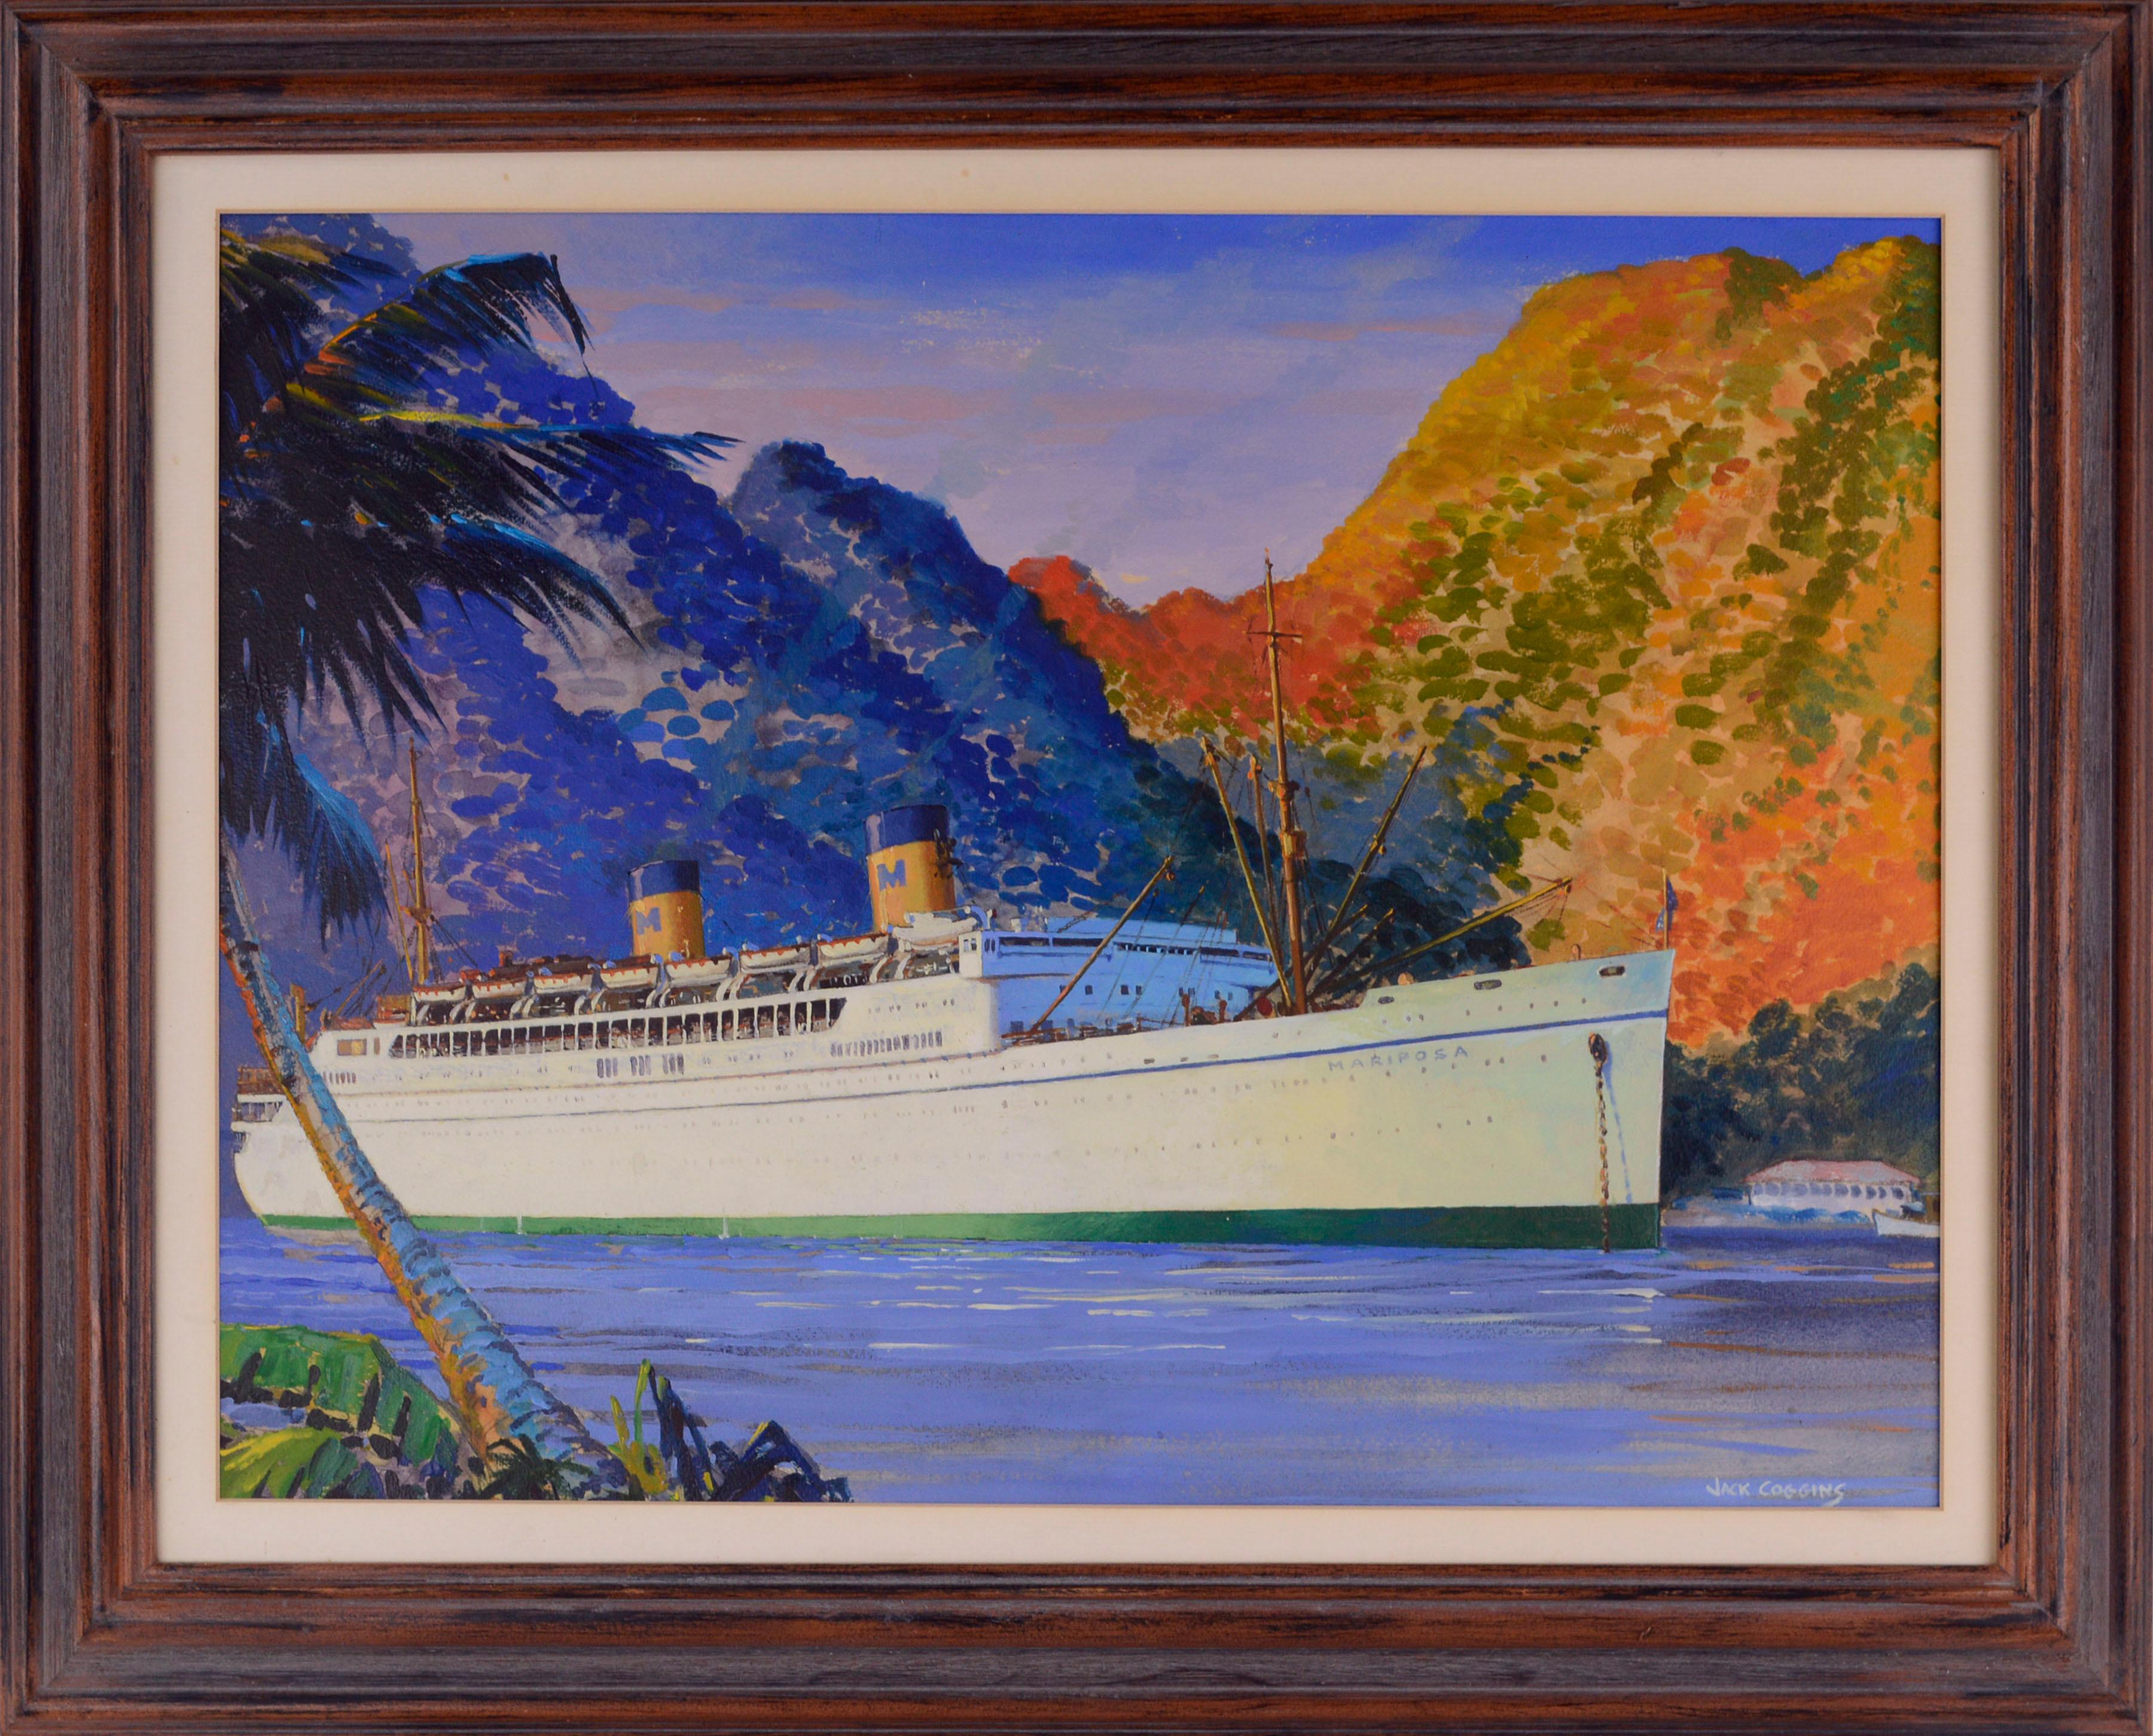 Jack Banham Coggins  Landscape Painting - S.S. Mariposa, Matson Steamship - Historical Maritime Seascape Illustration